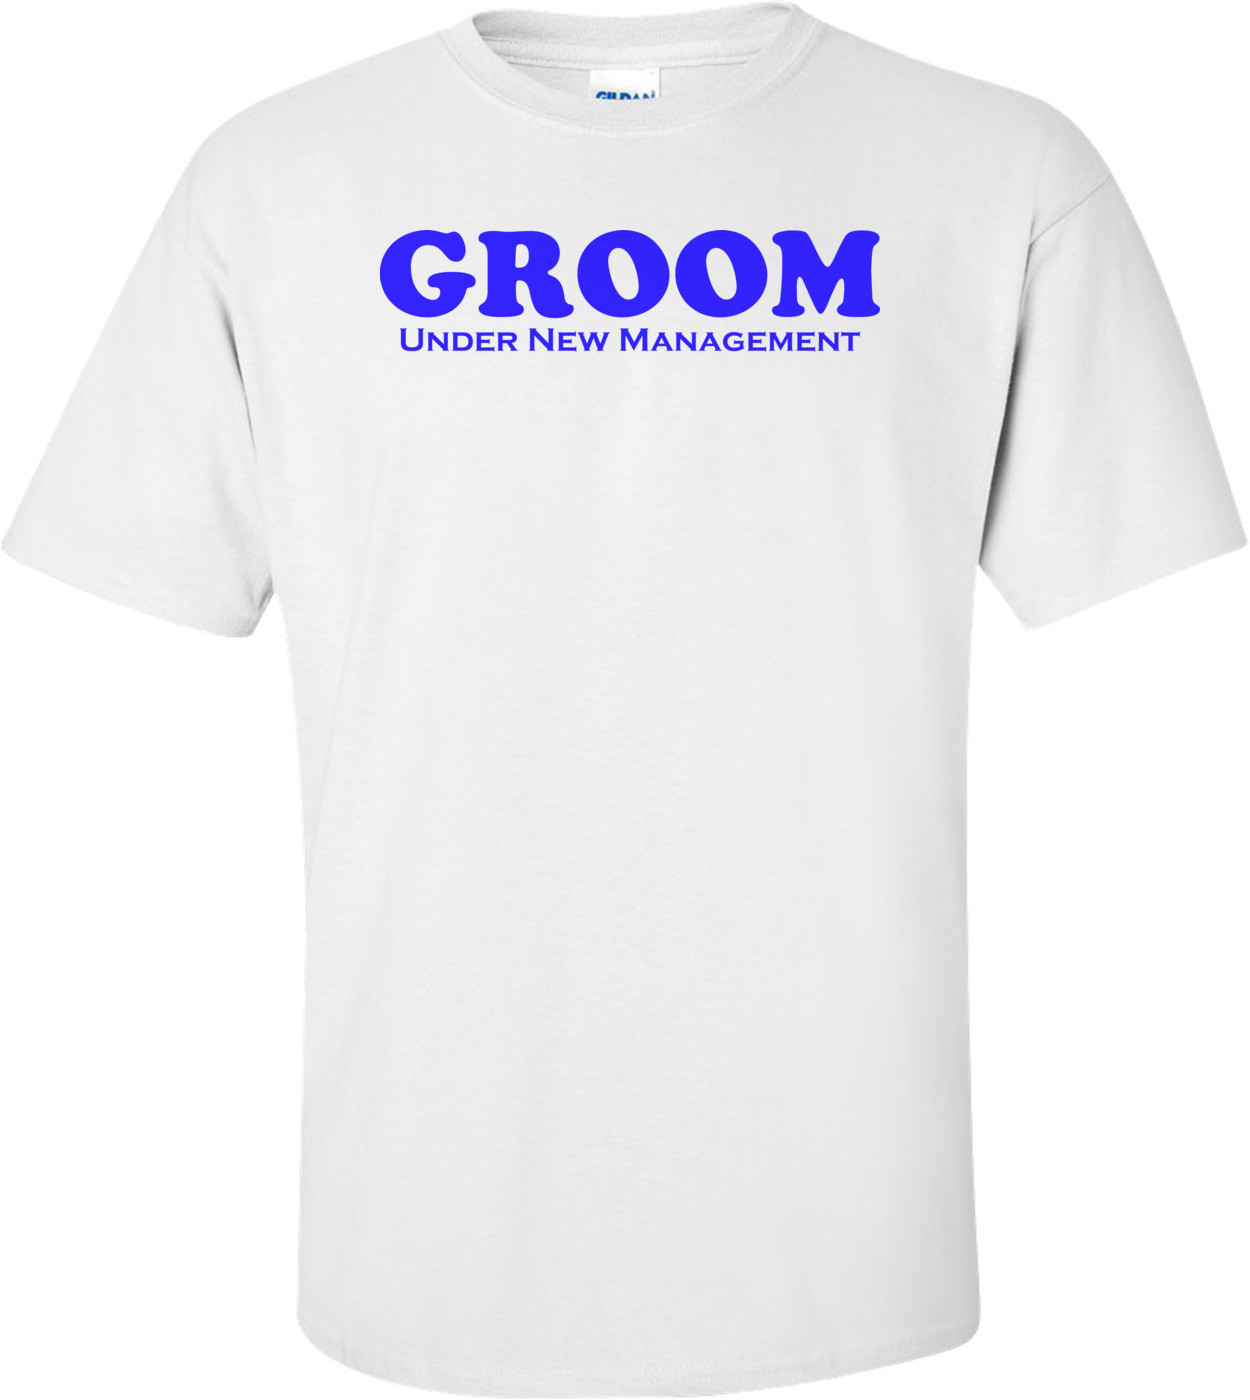 Groom - Under New Management Shirt